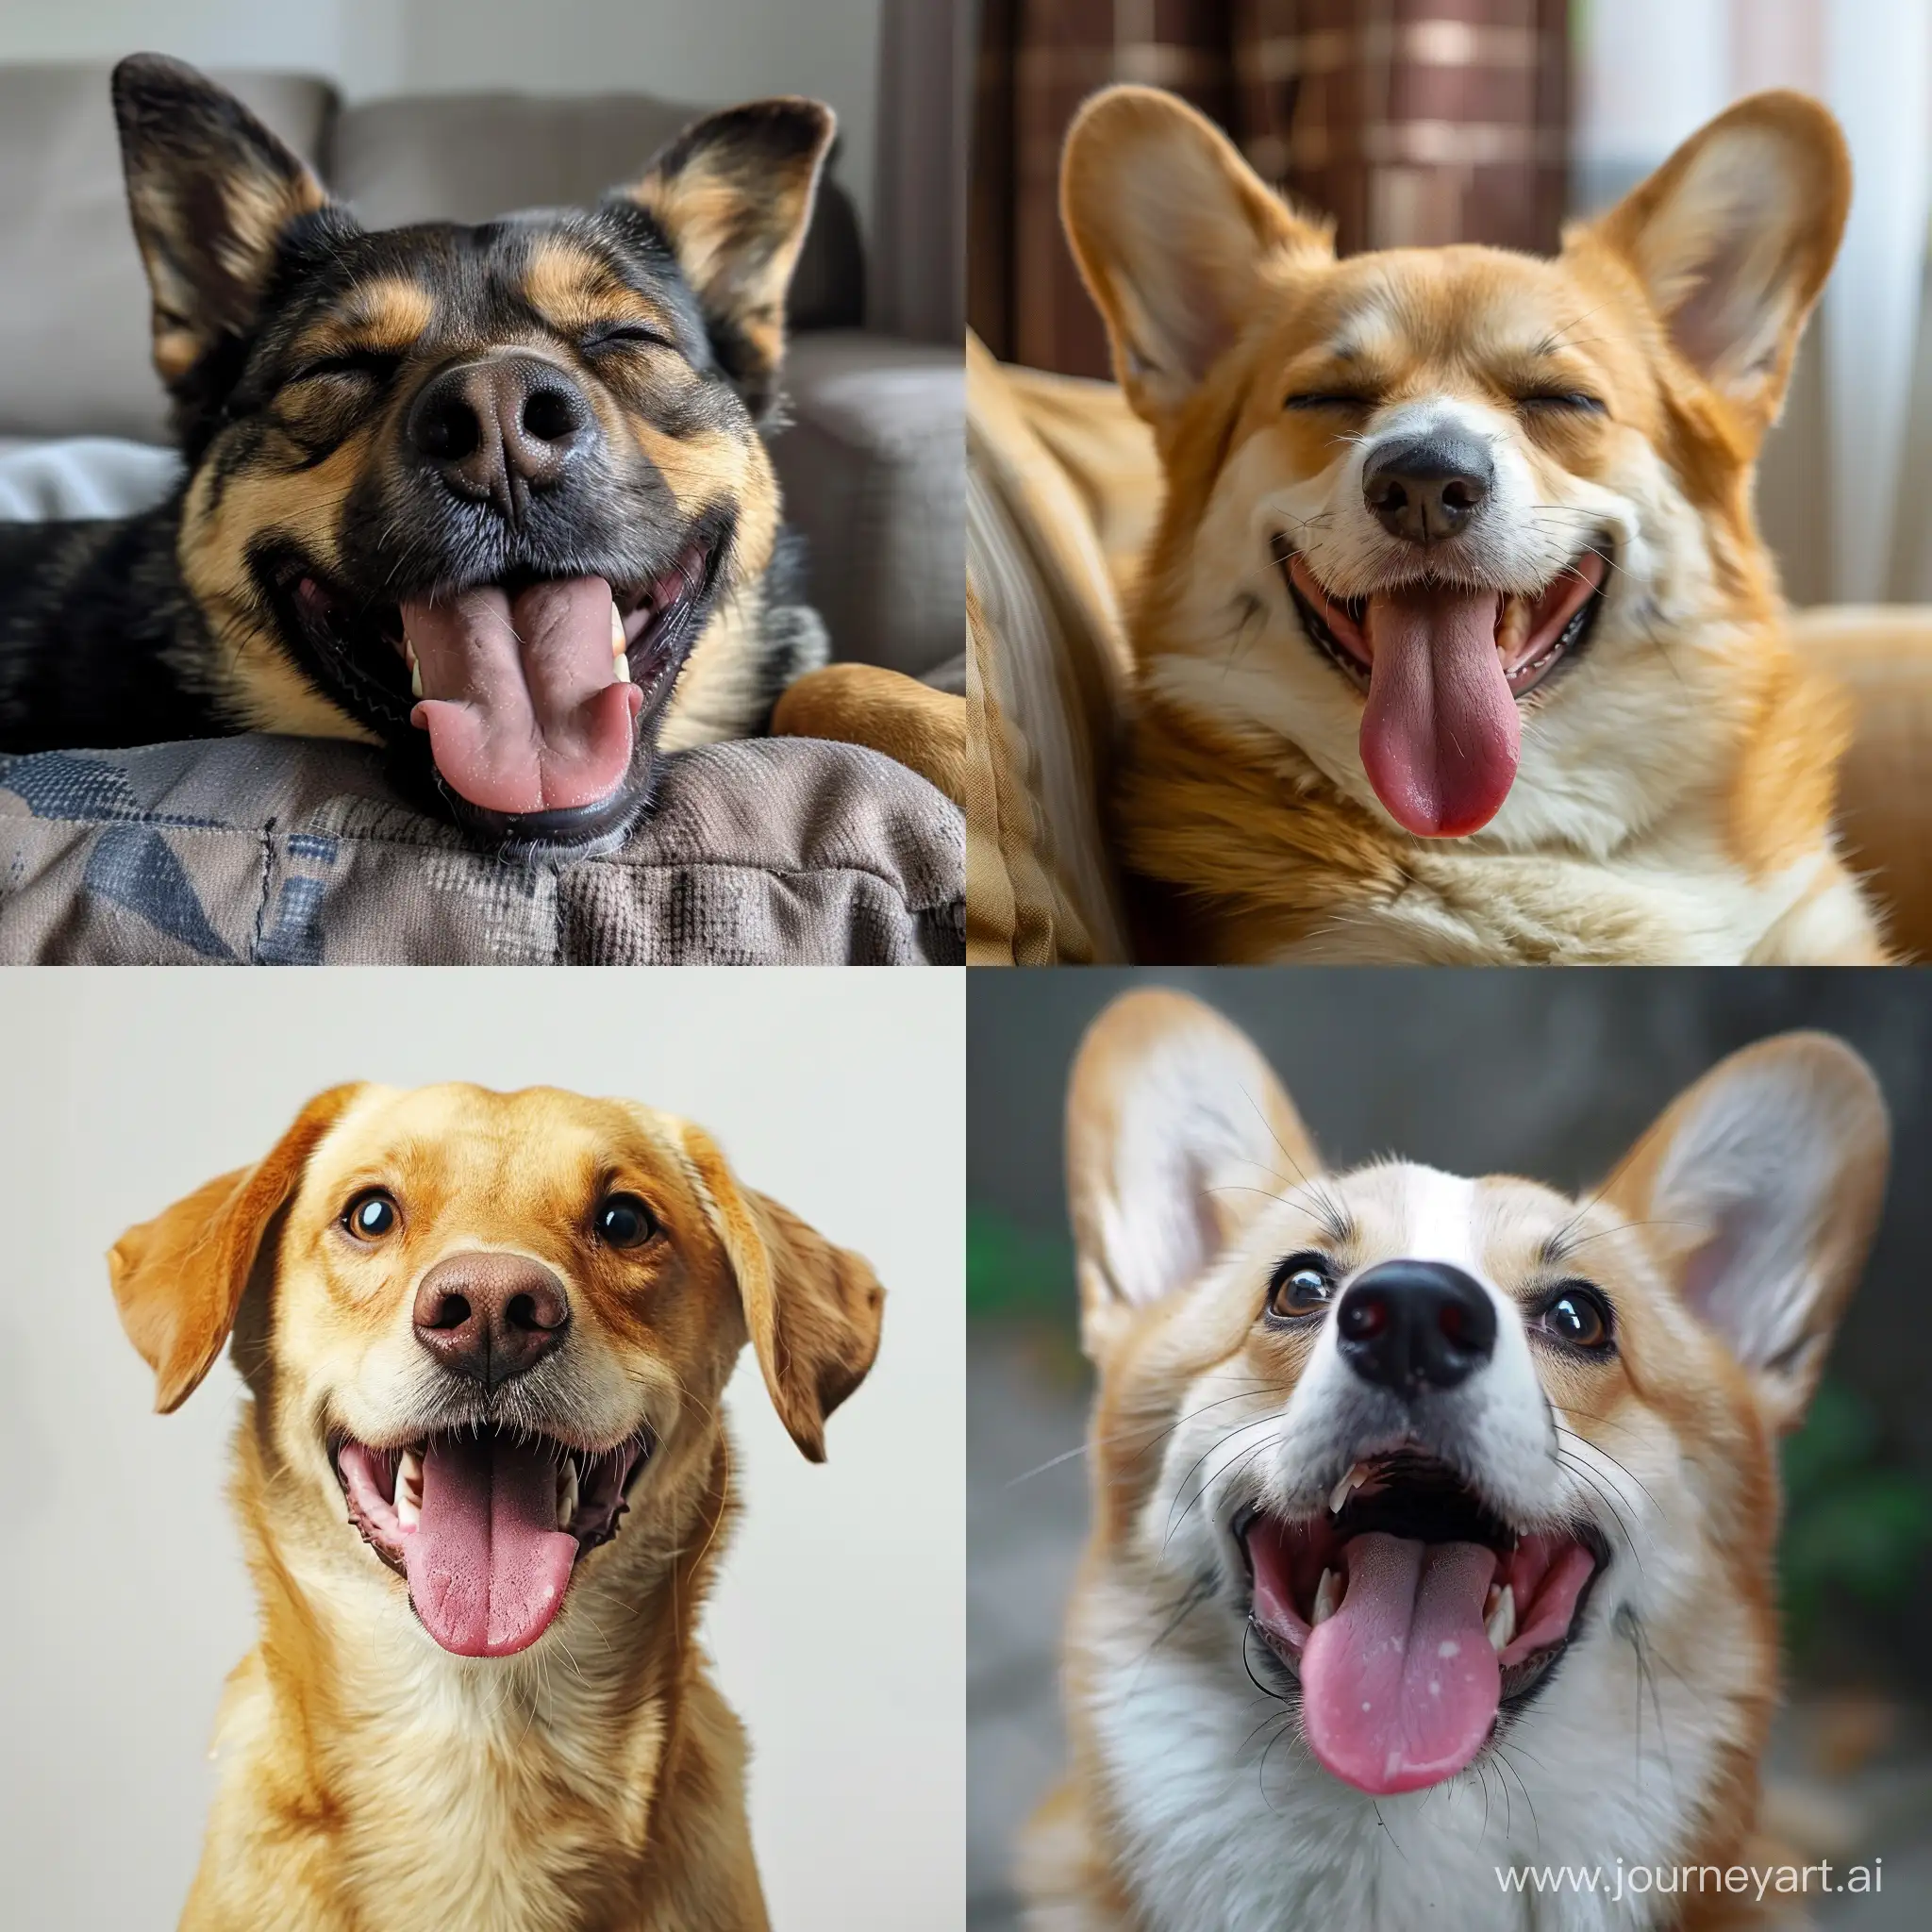 Joyful-Canine-Delight-Cheerful-Dog-in-Vibrant-Setting